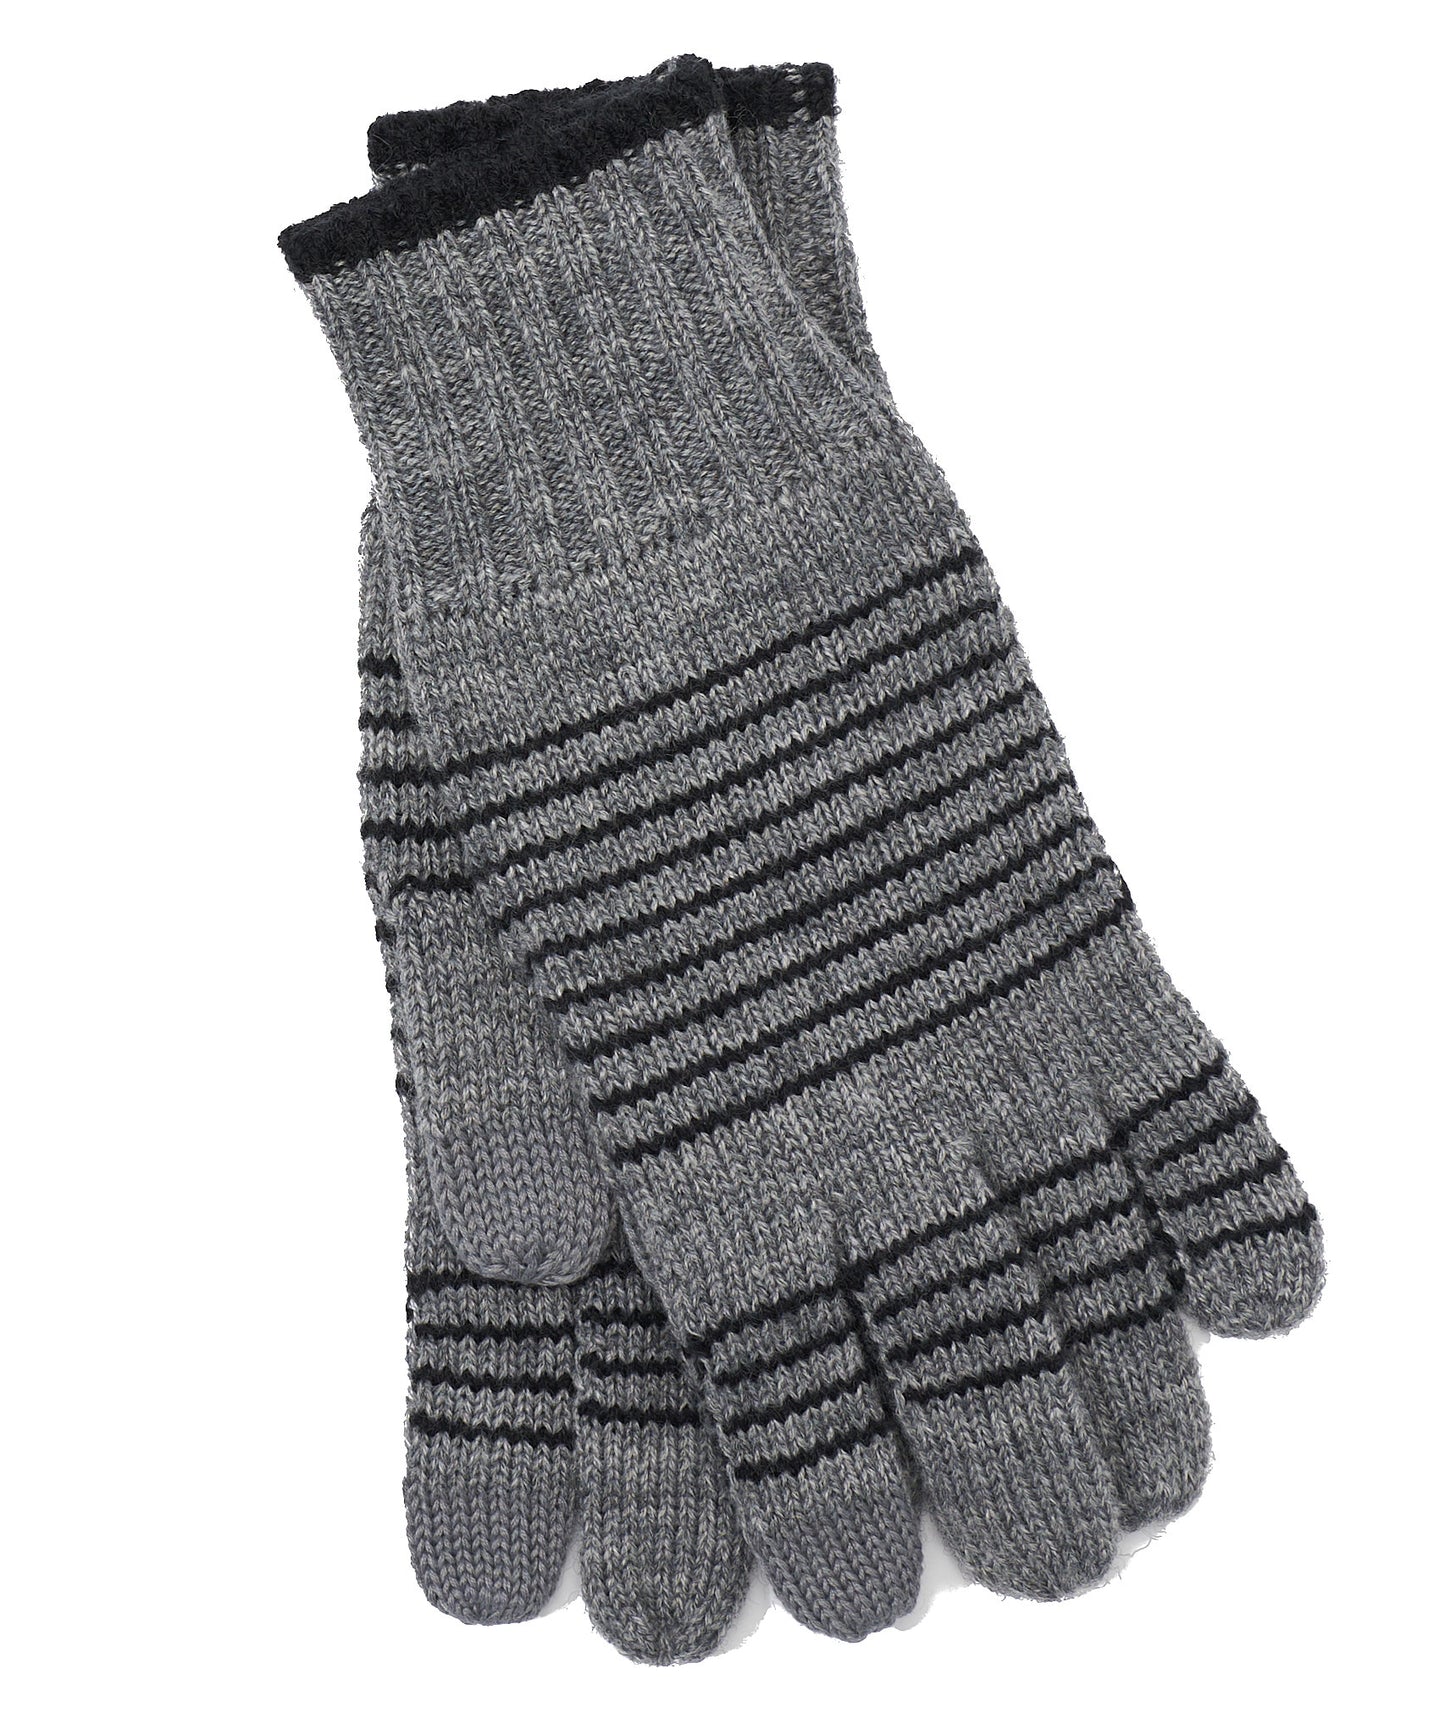 Engineered Radiant Glove in color Grey Heather